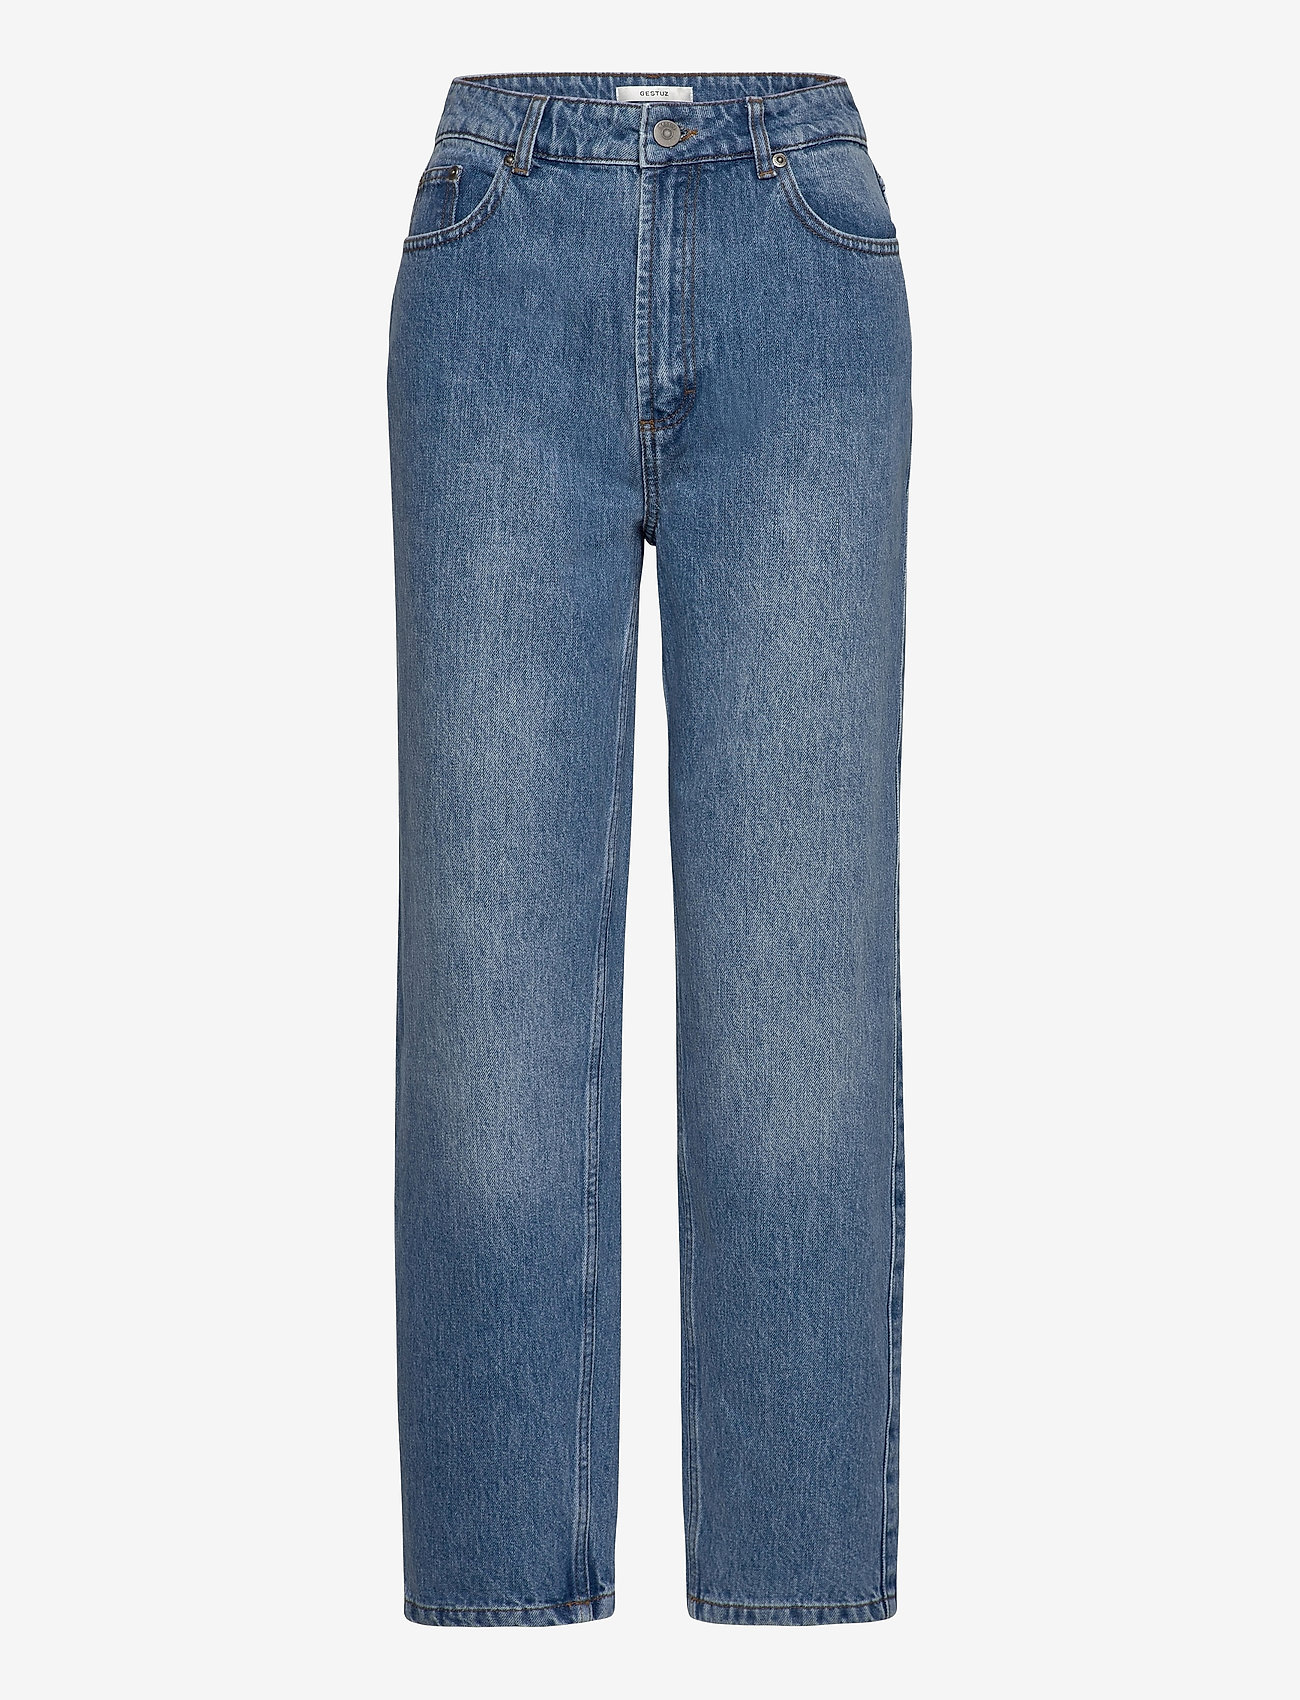 Gestuz - DacyGZ HW straight jeans - proste dżinsy - medium blue - 0